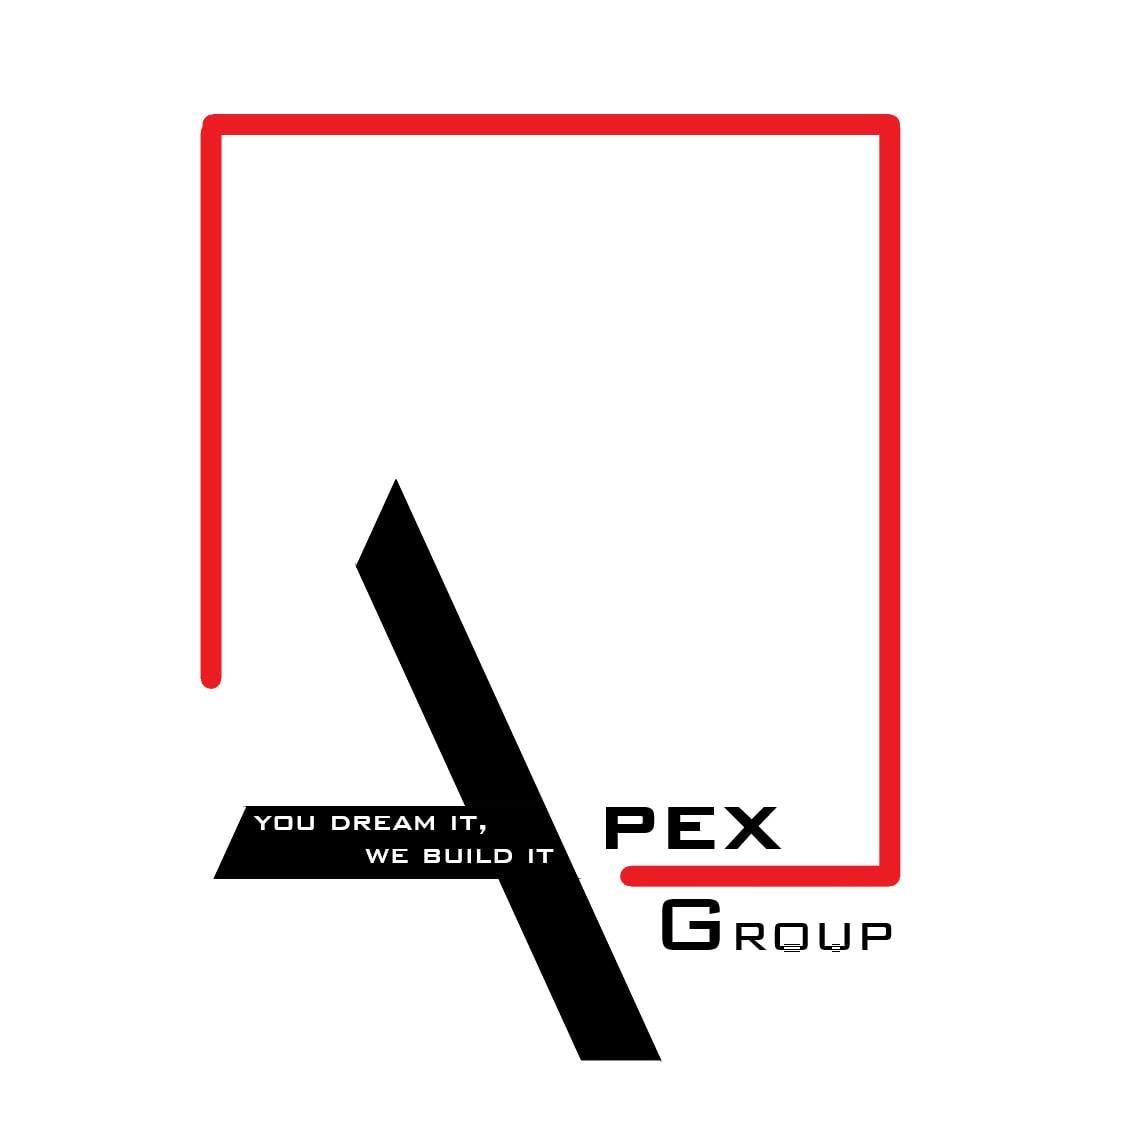 Apex Group|Legal Services|Professional Services